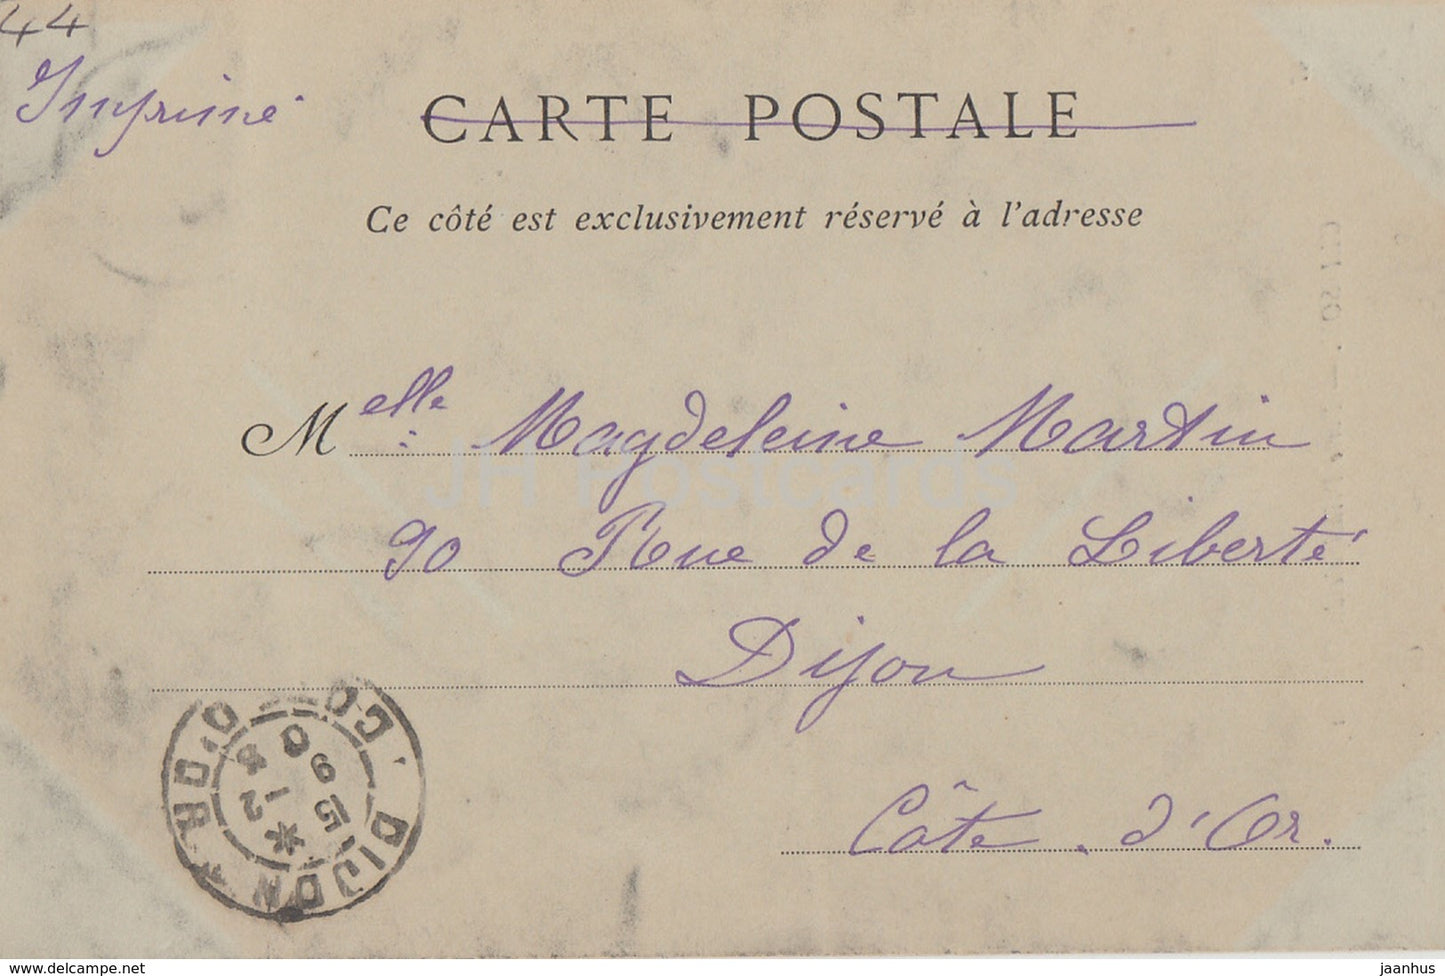 Clisson - Porte Principale du Chateau - Schloss - 47 - alte Postkarte - 1903 - Frankreich - gebraucht